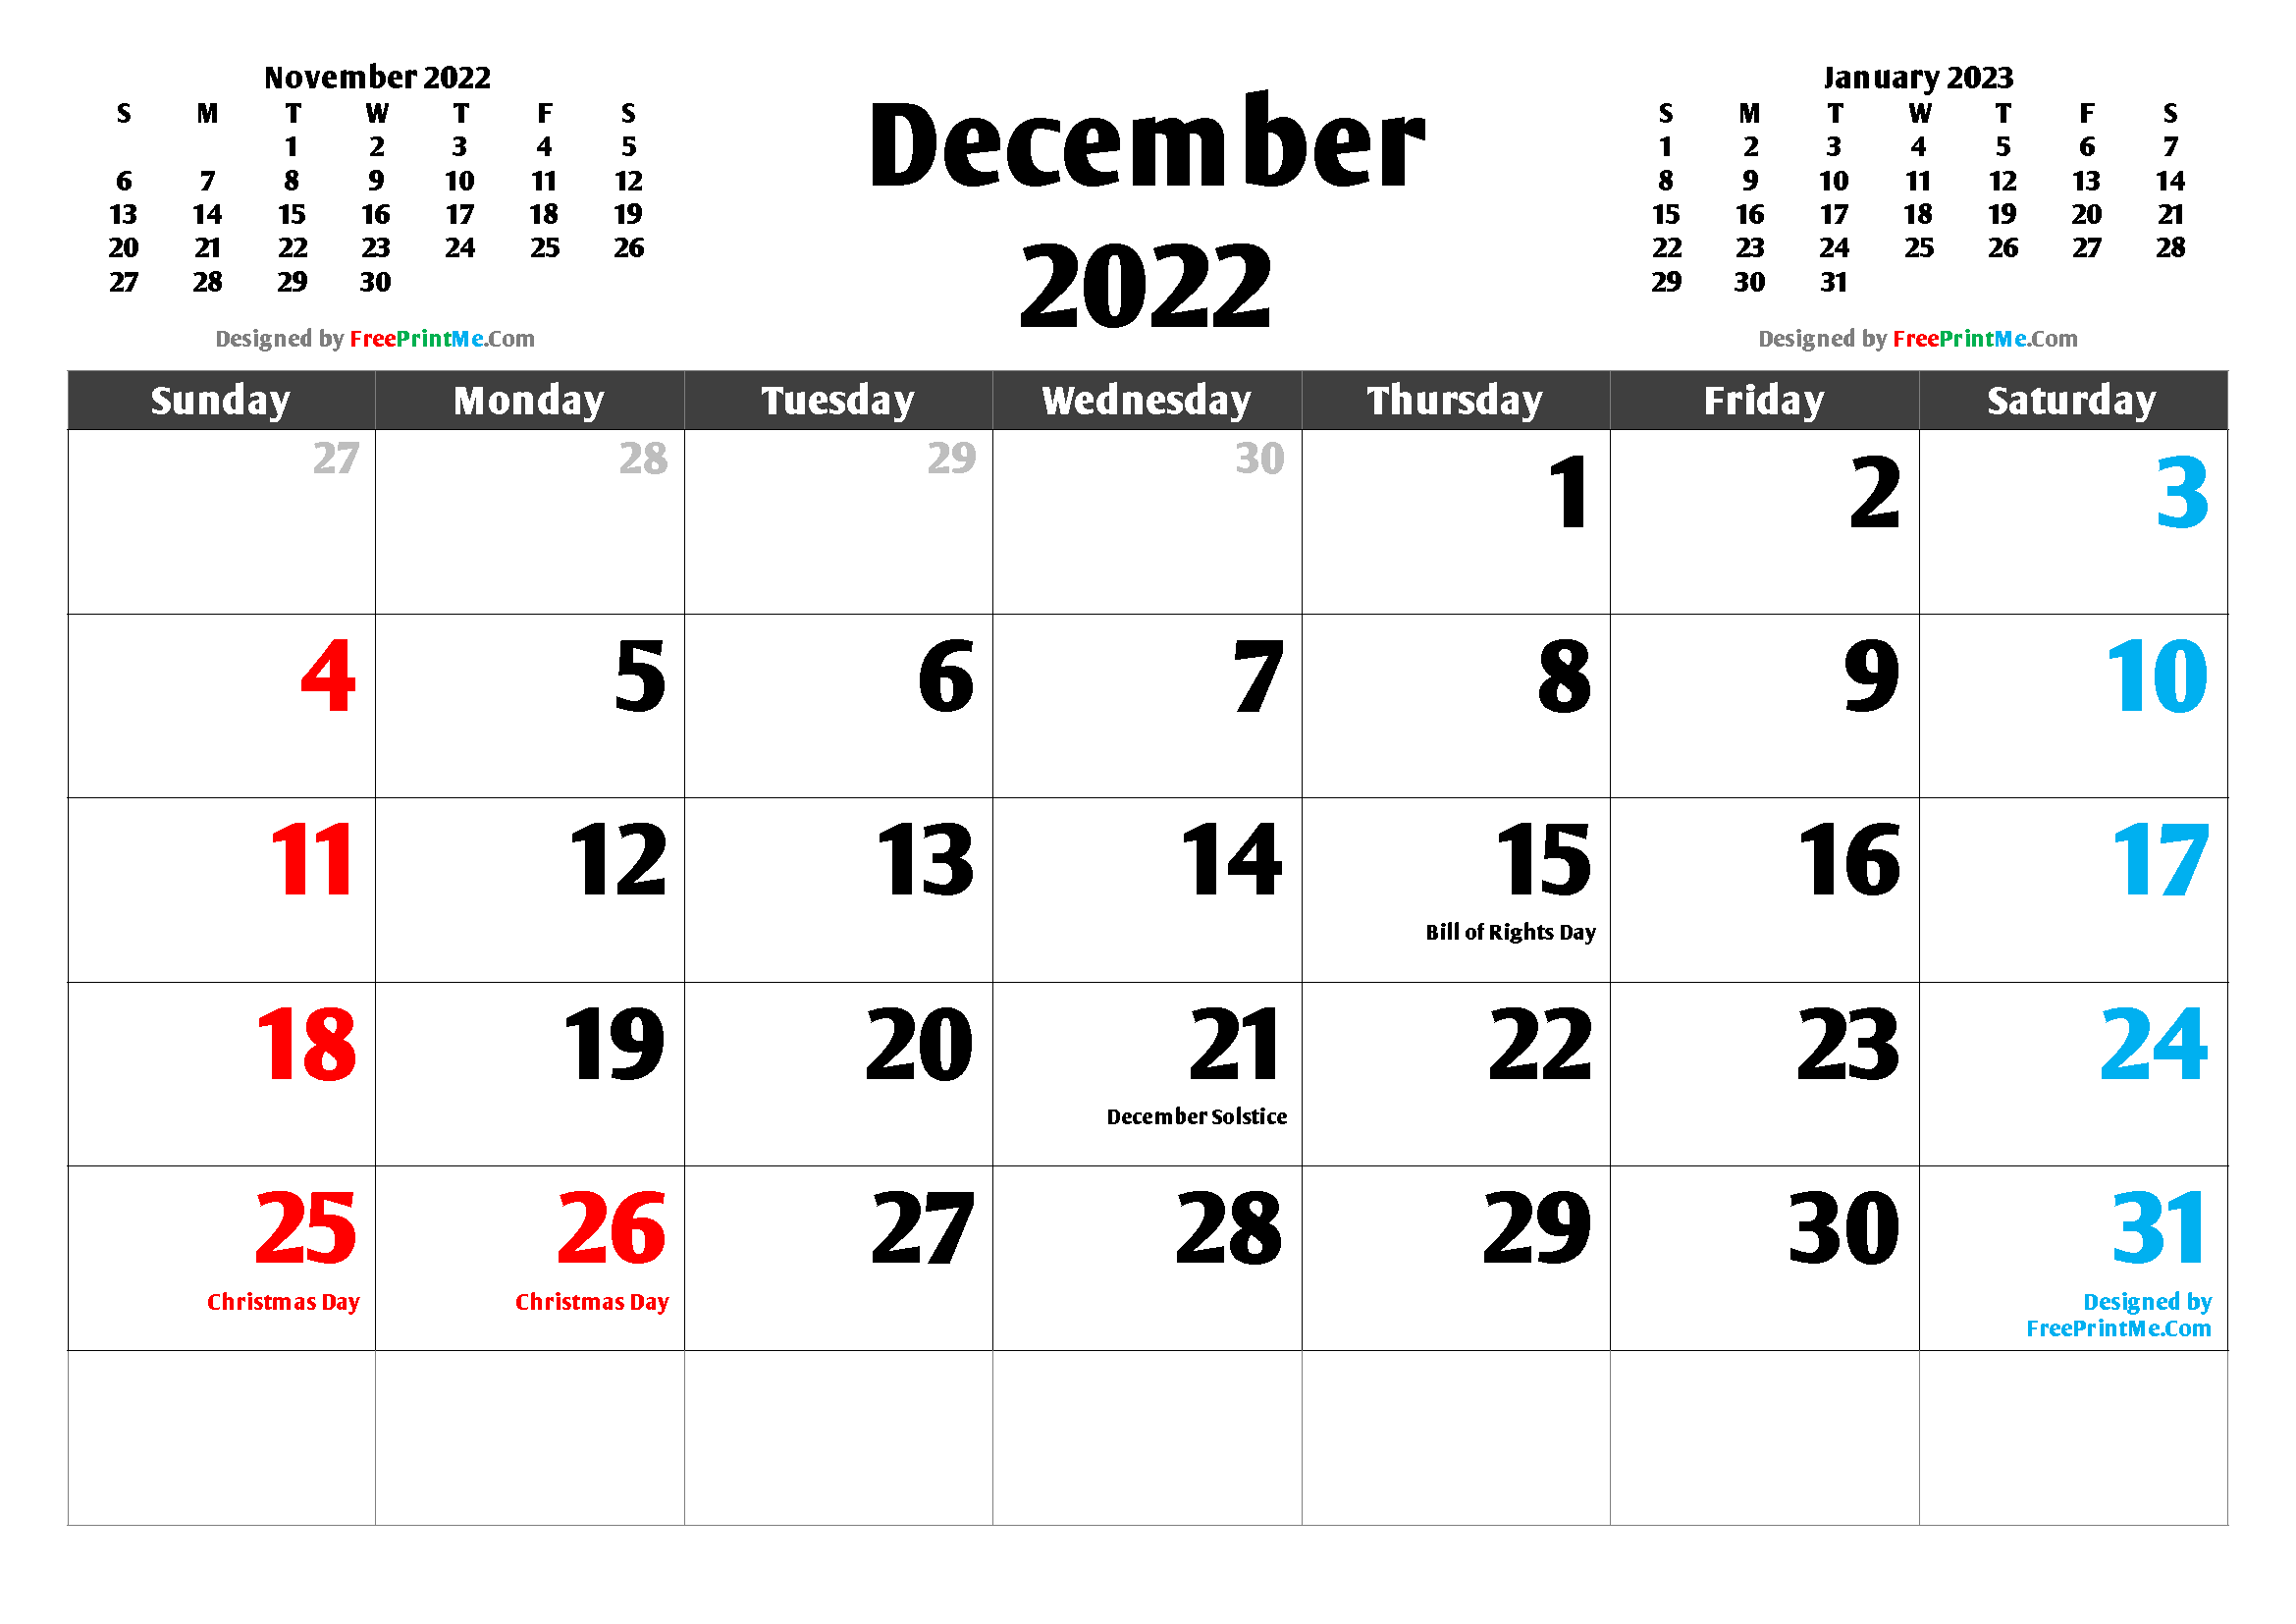 December 2022 Holiday Calendar Free Printable December 2022 Calendar Pdf, Png Image